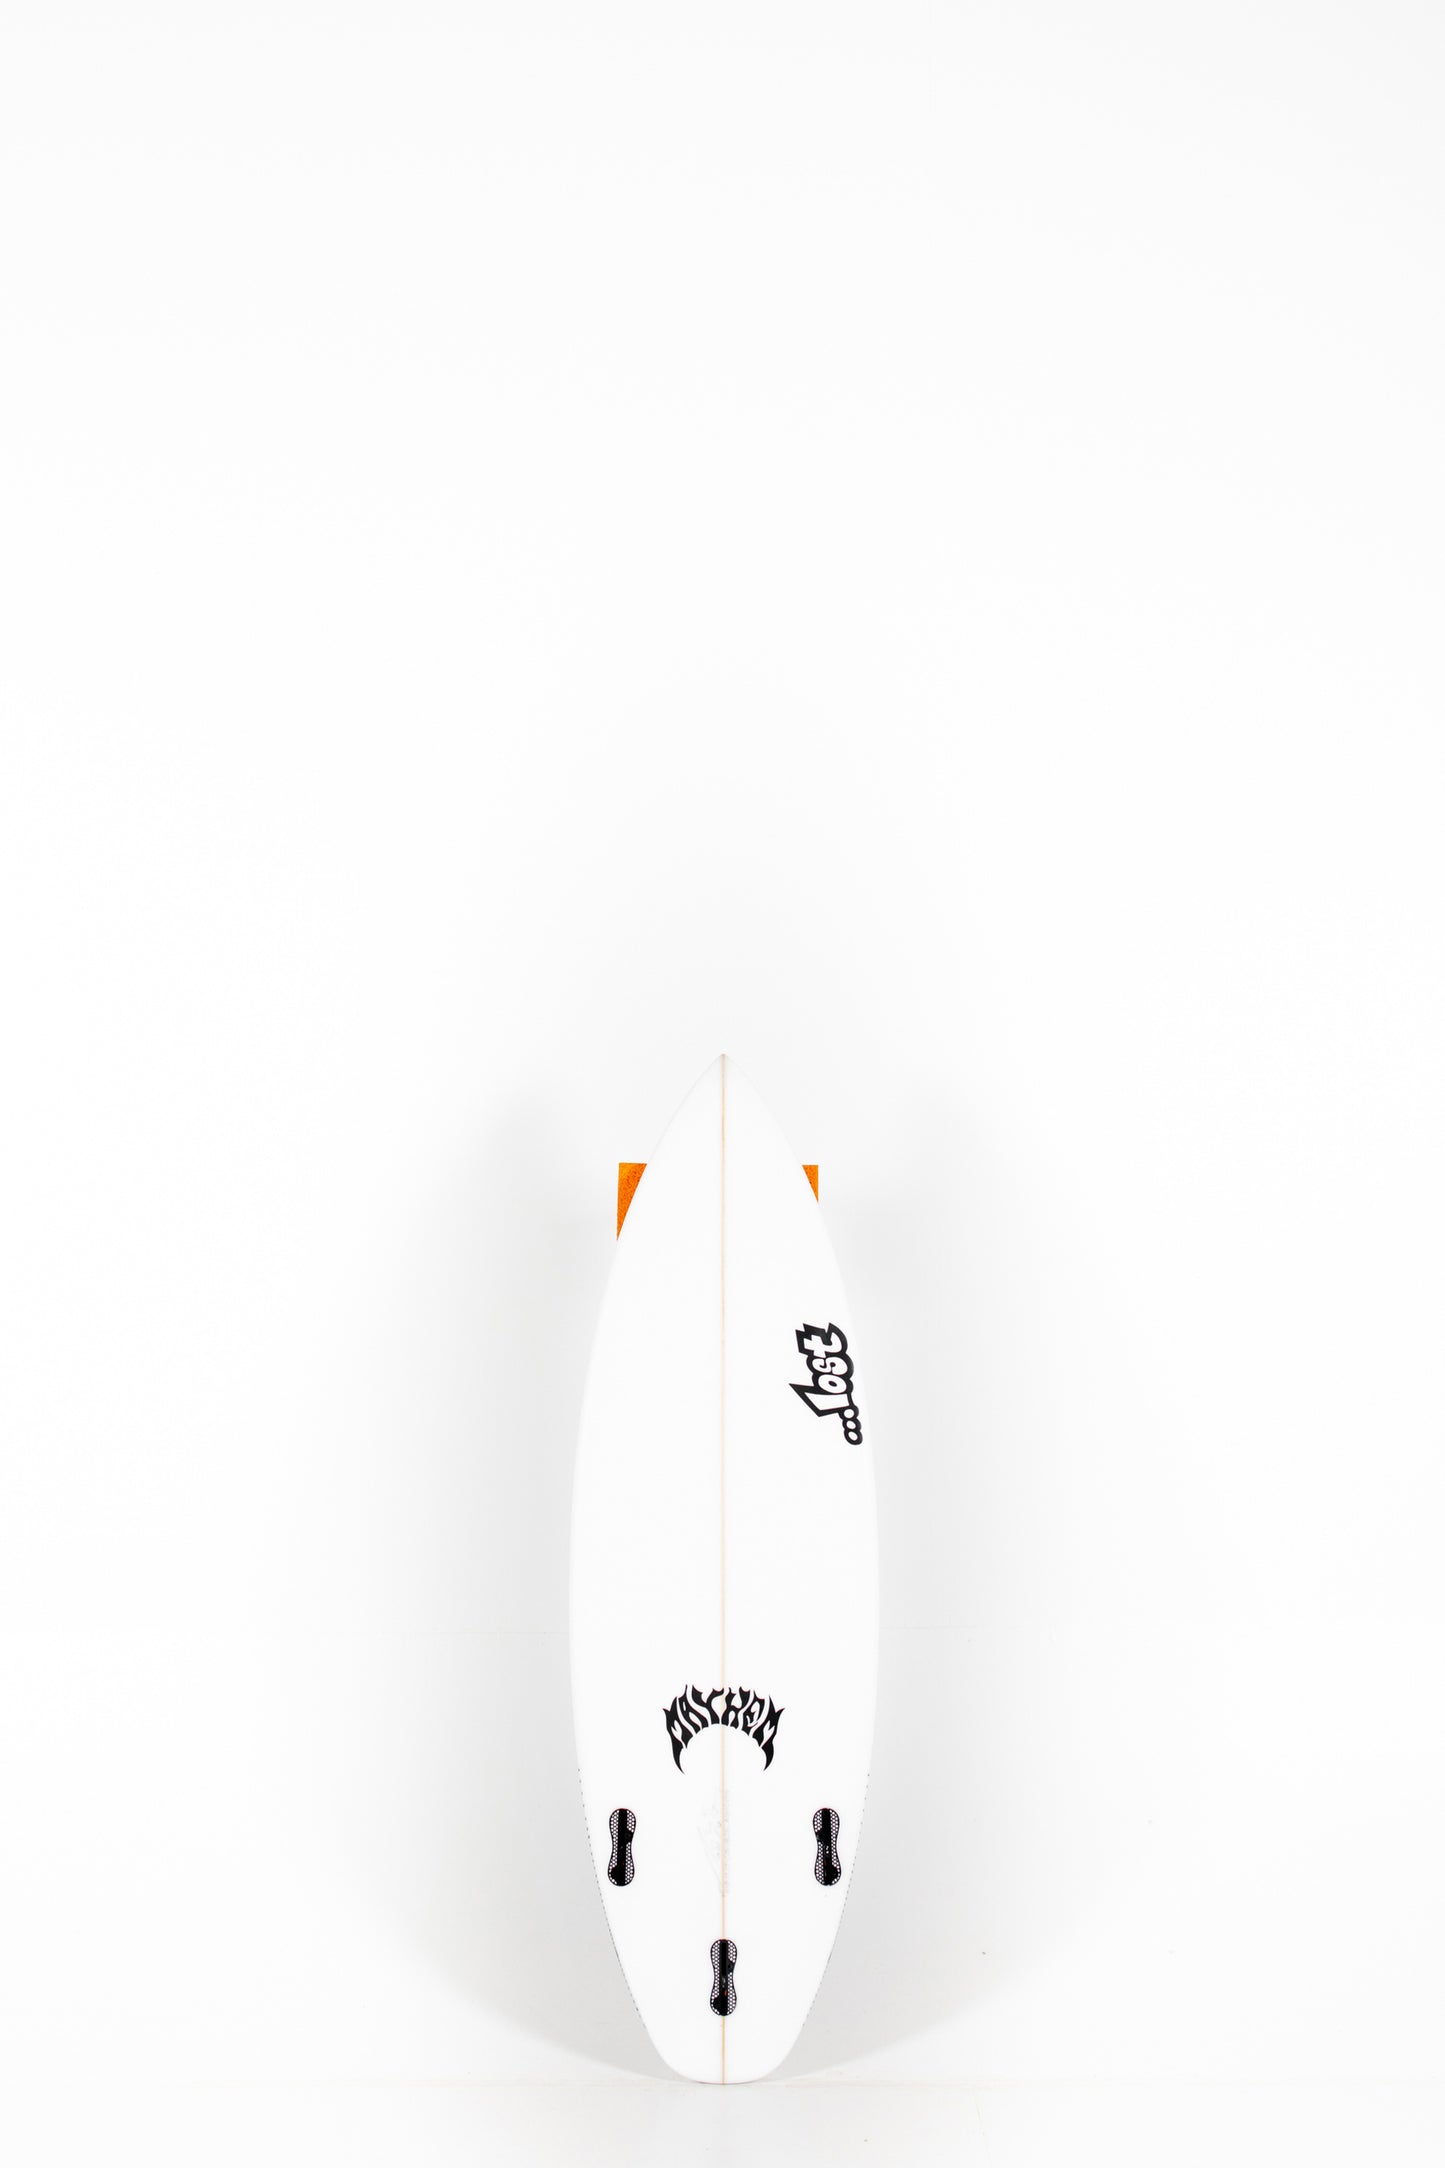 Pukas Surf Shop - Lost Surfboard - POCKET ROCKET GROM by Matt Biolos - 4’10” x 17,25 x 2,06 x 18,25L - MH12694